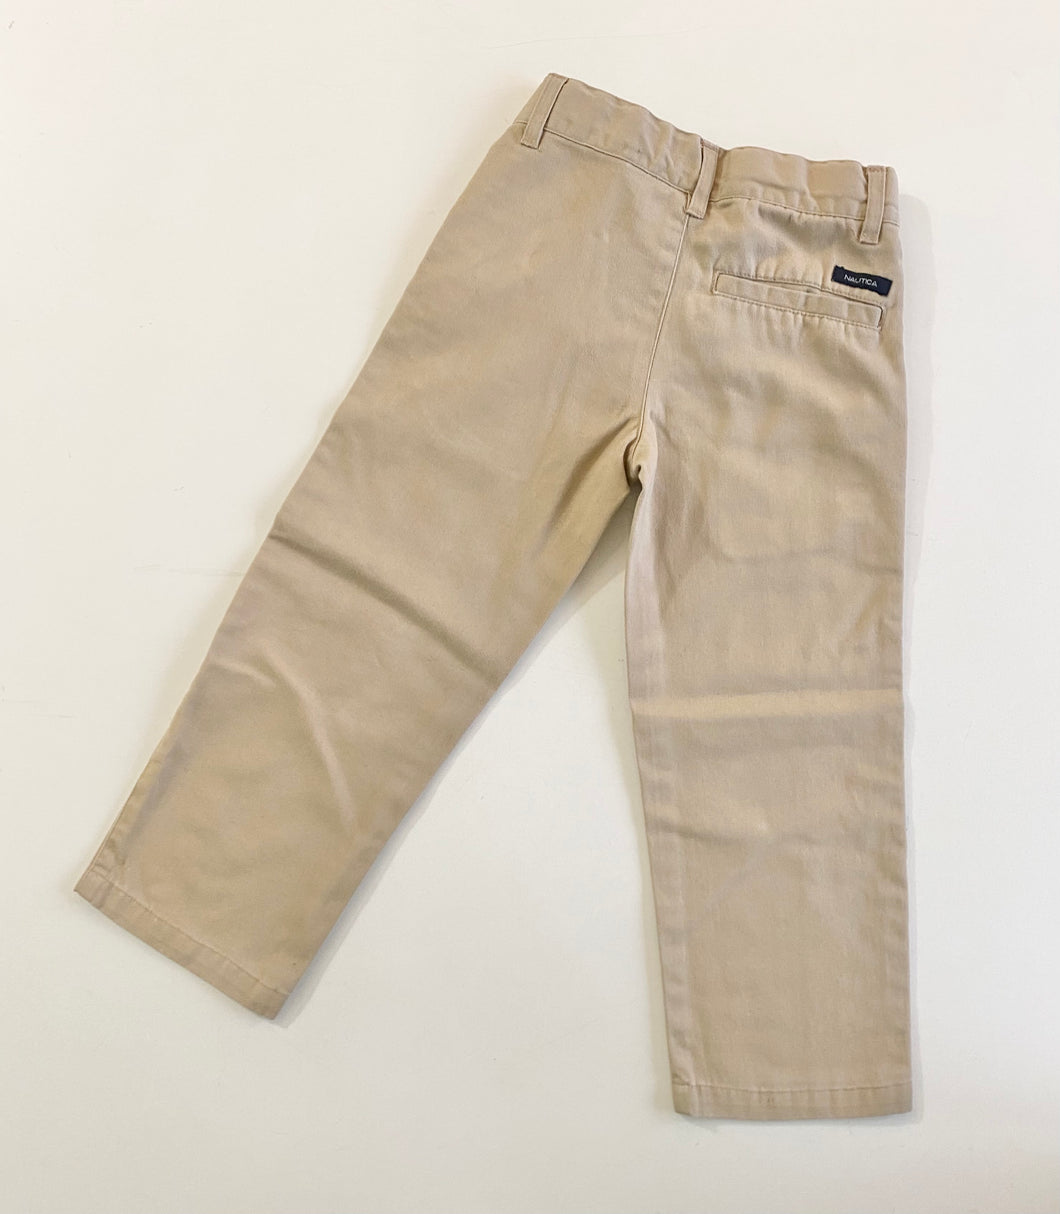 90s Nautica pants (Age 5)